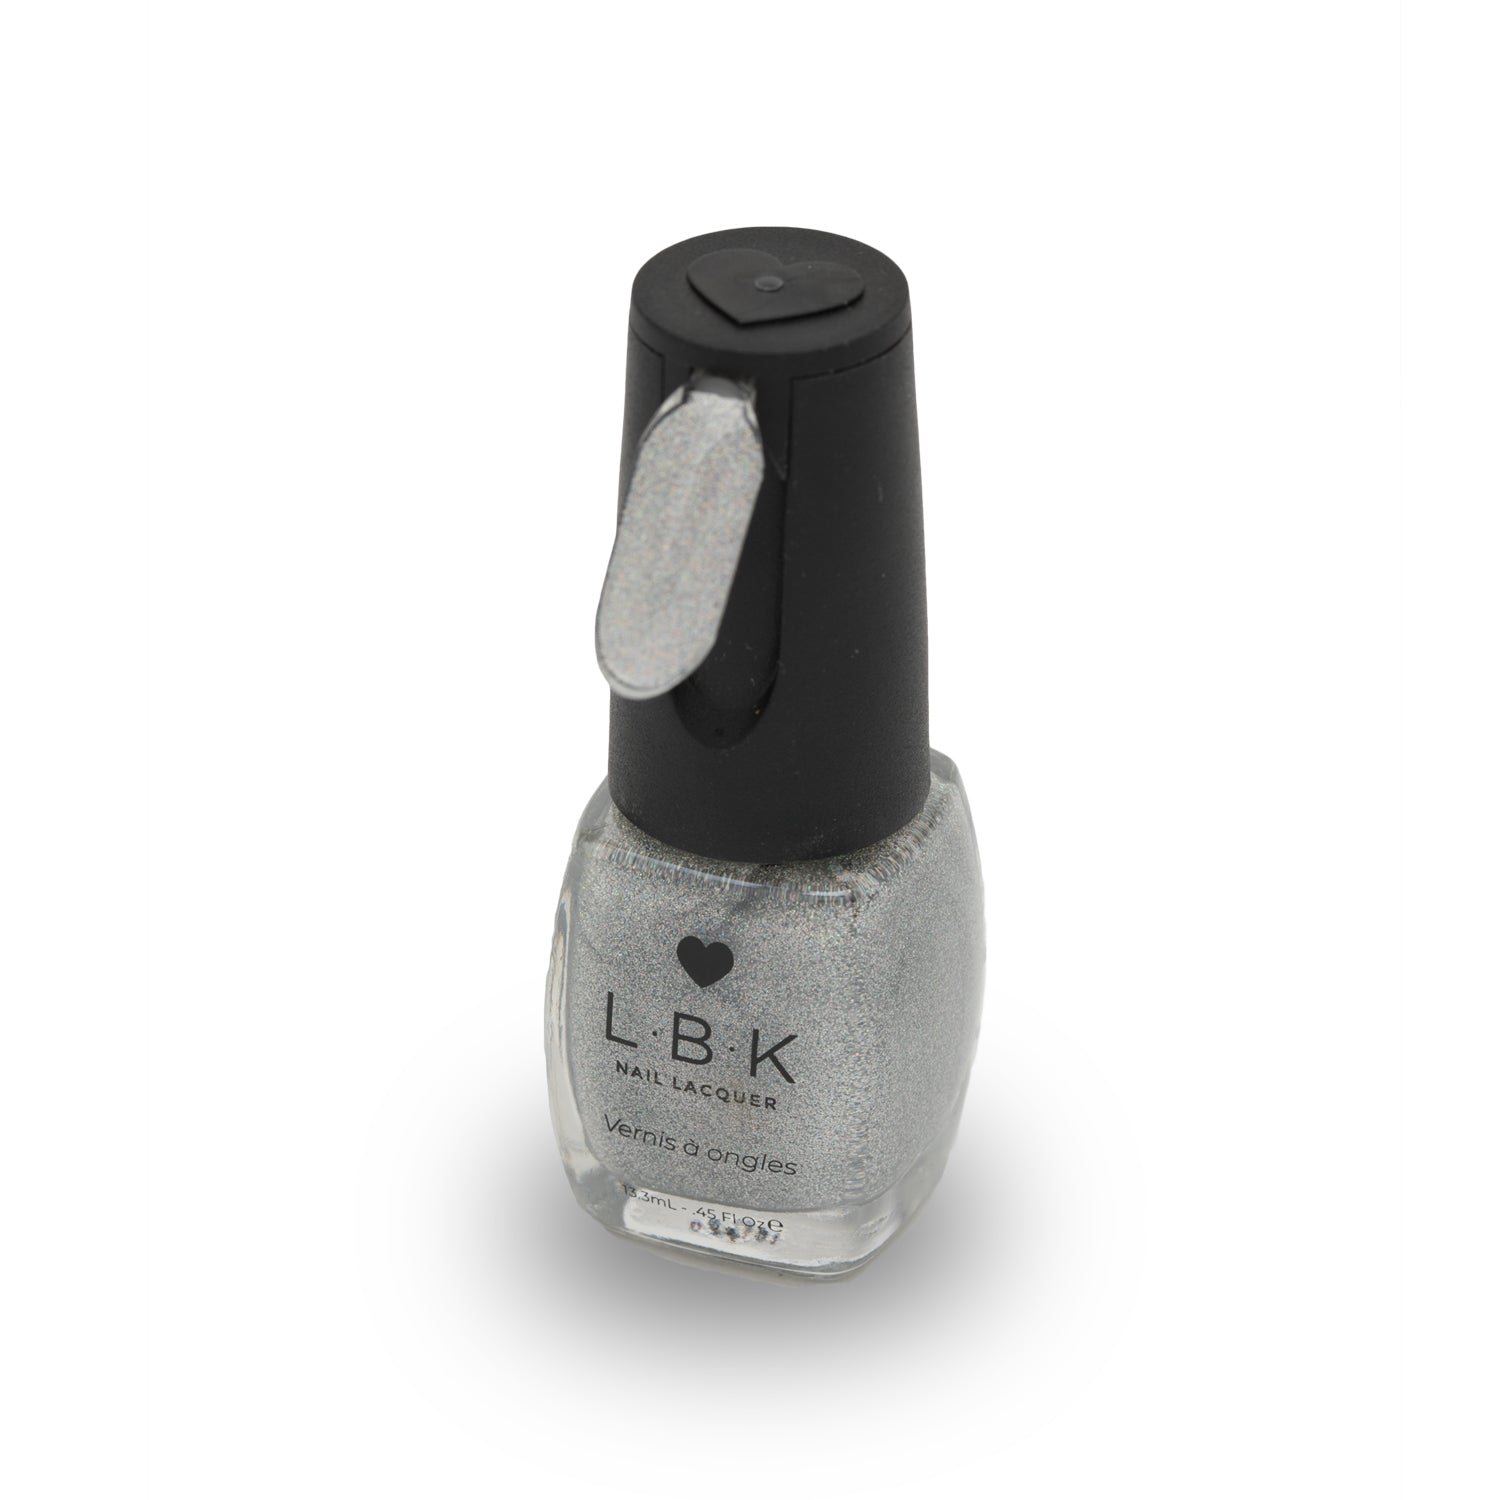 Silver nail foils on black - My Nail Polish Online